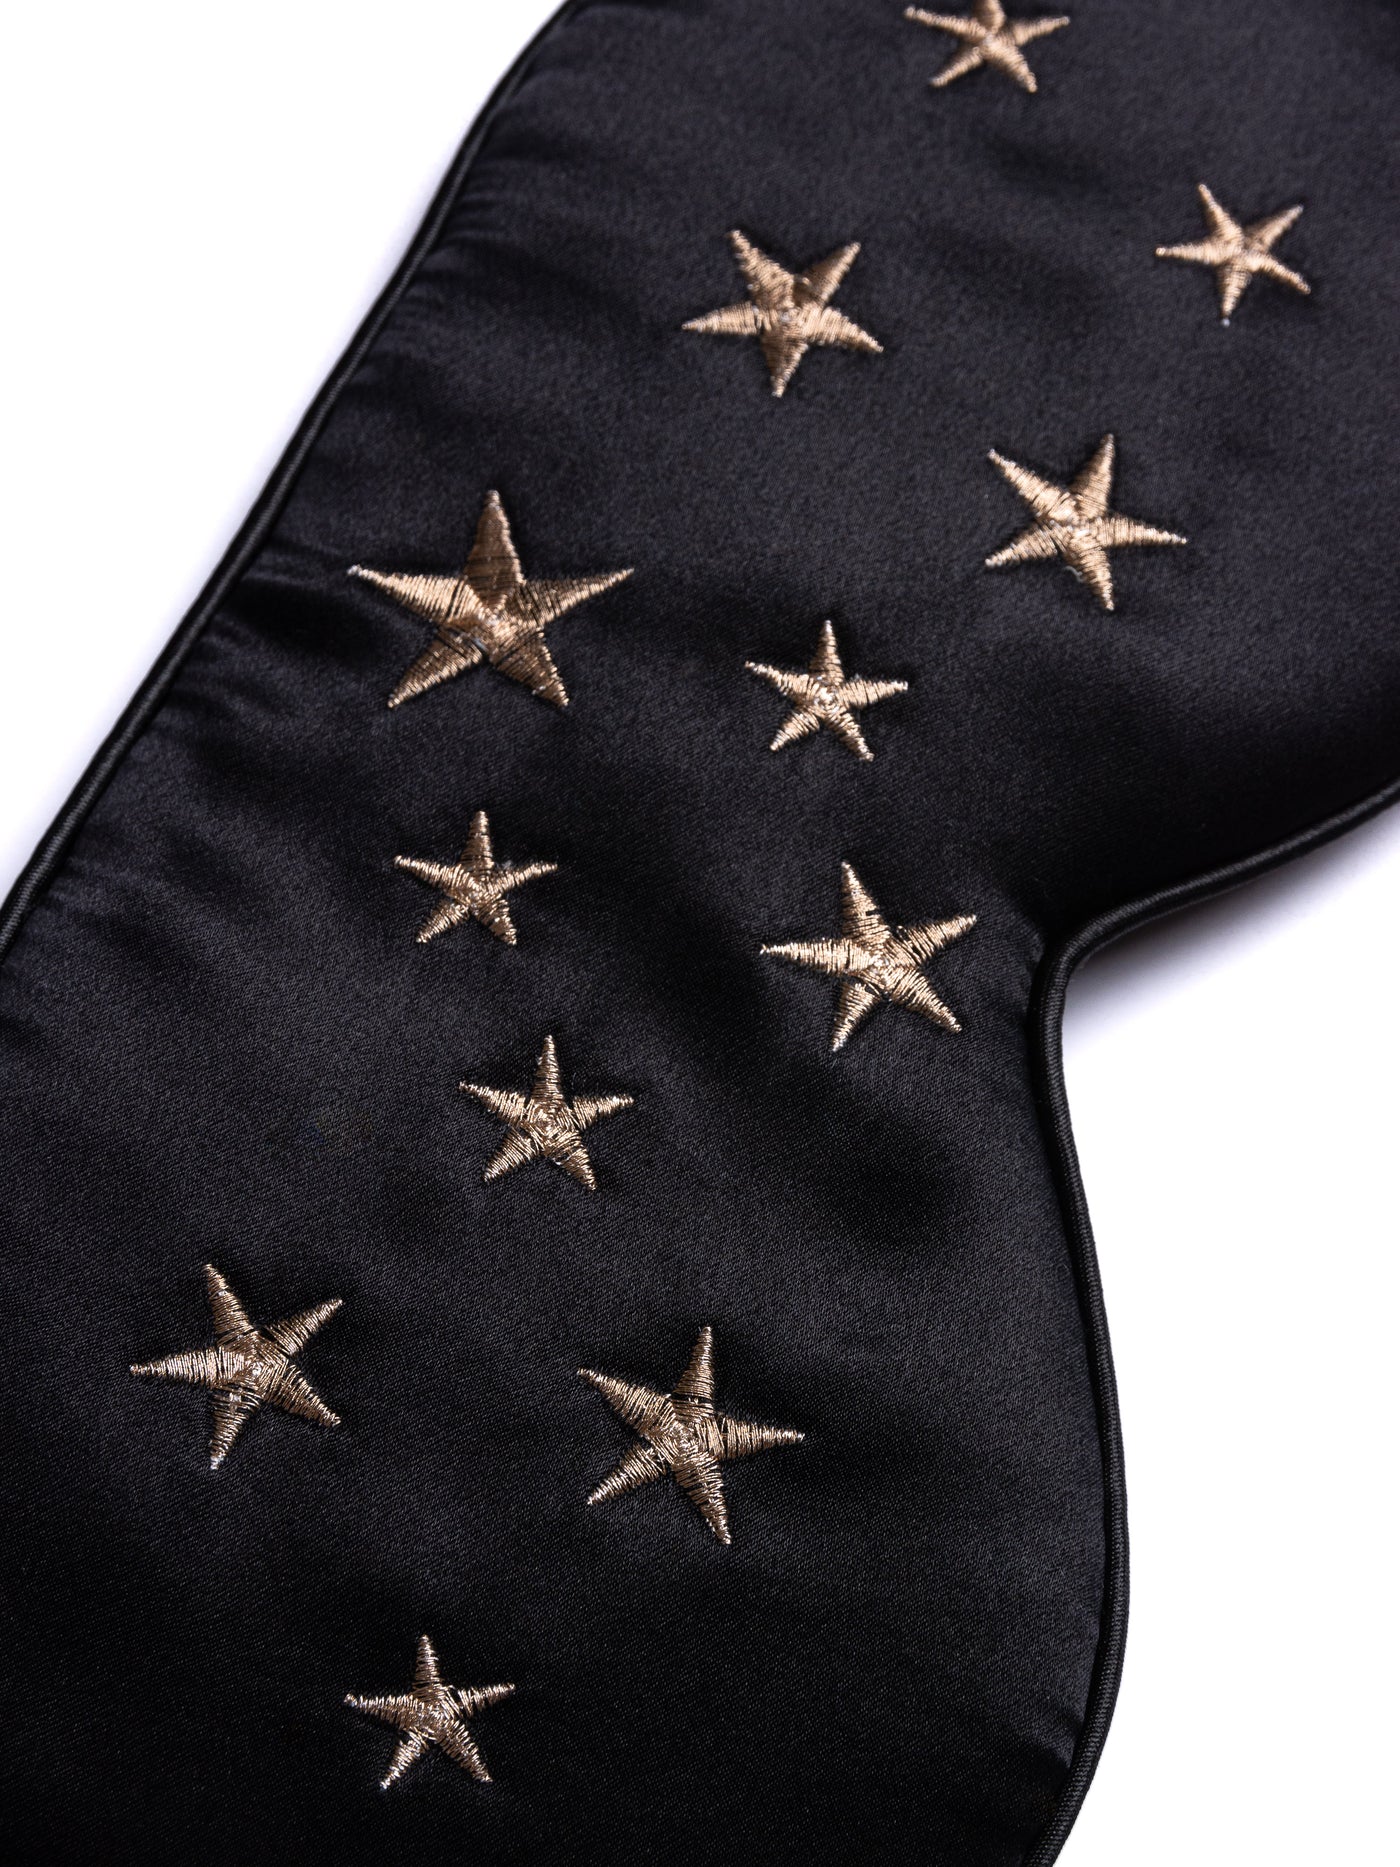 Gold Stars+ Black Silk Sleep Mask